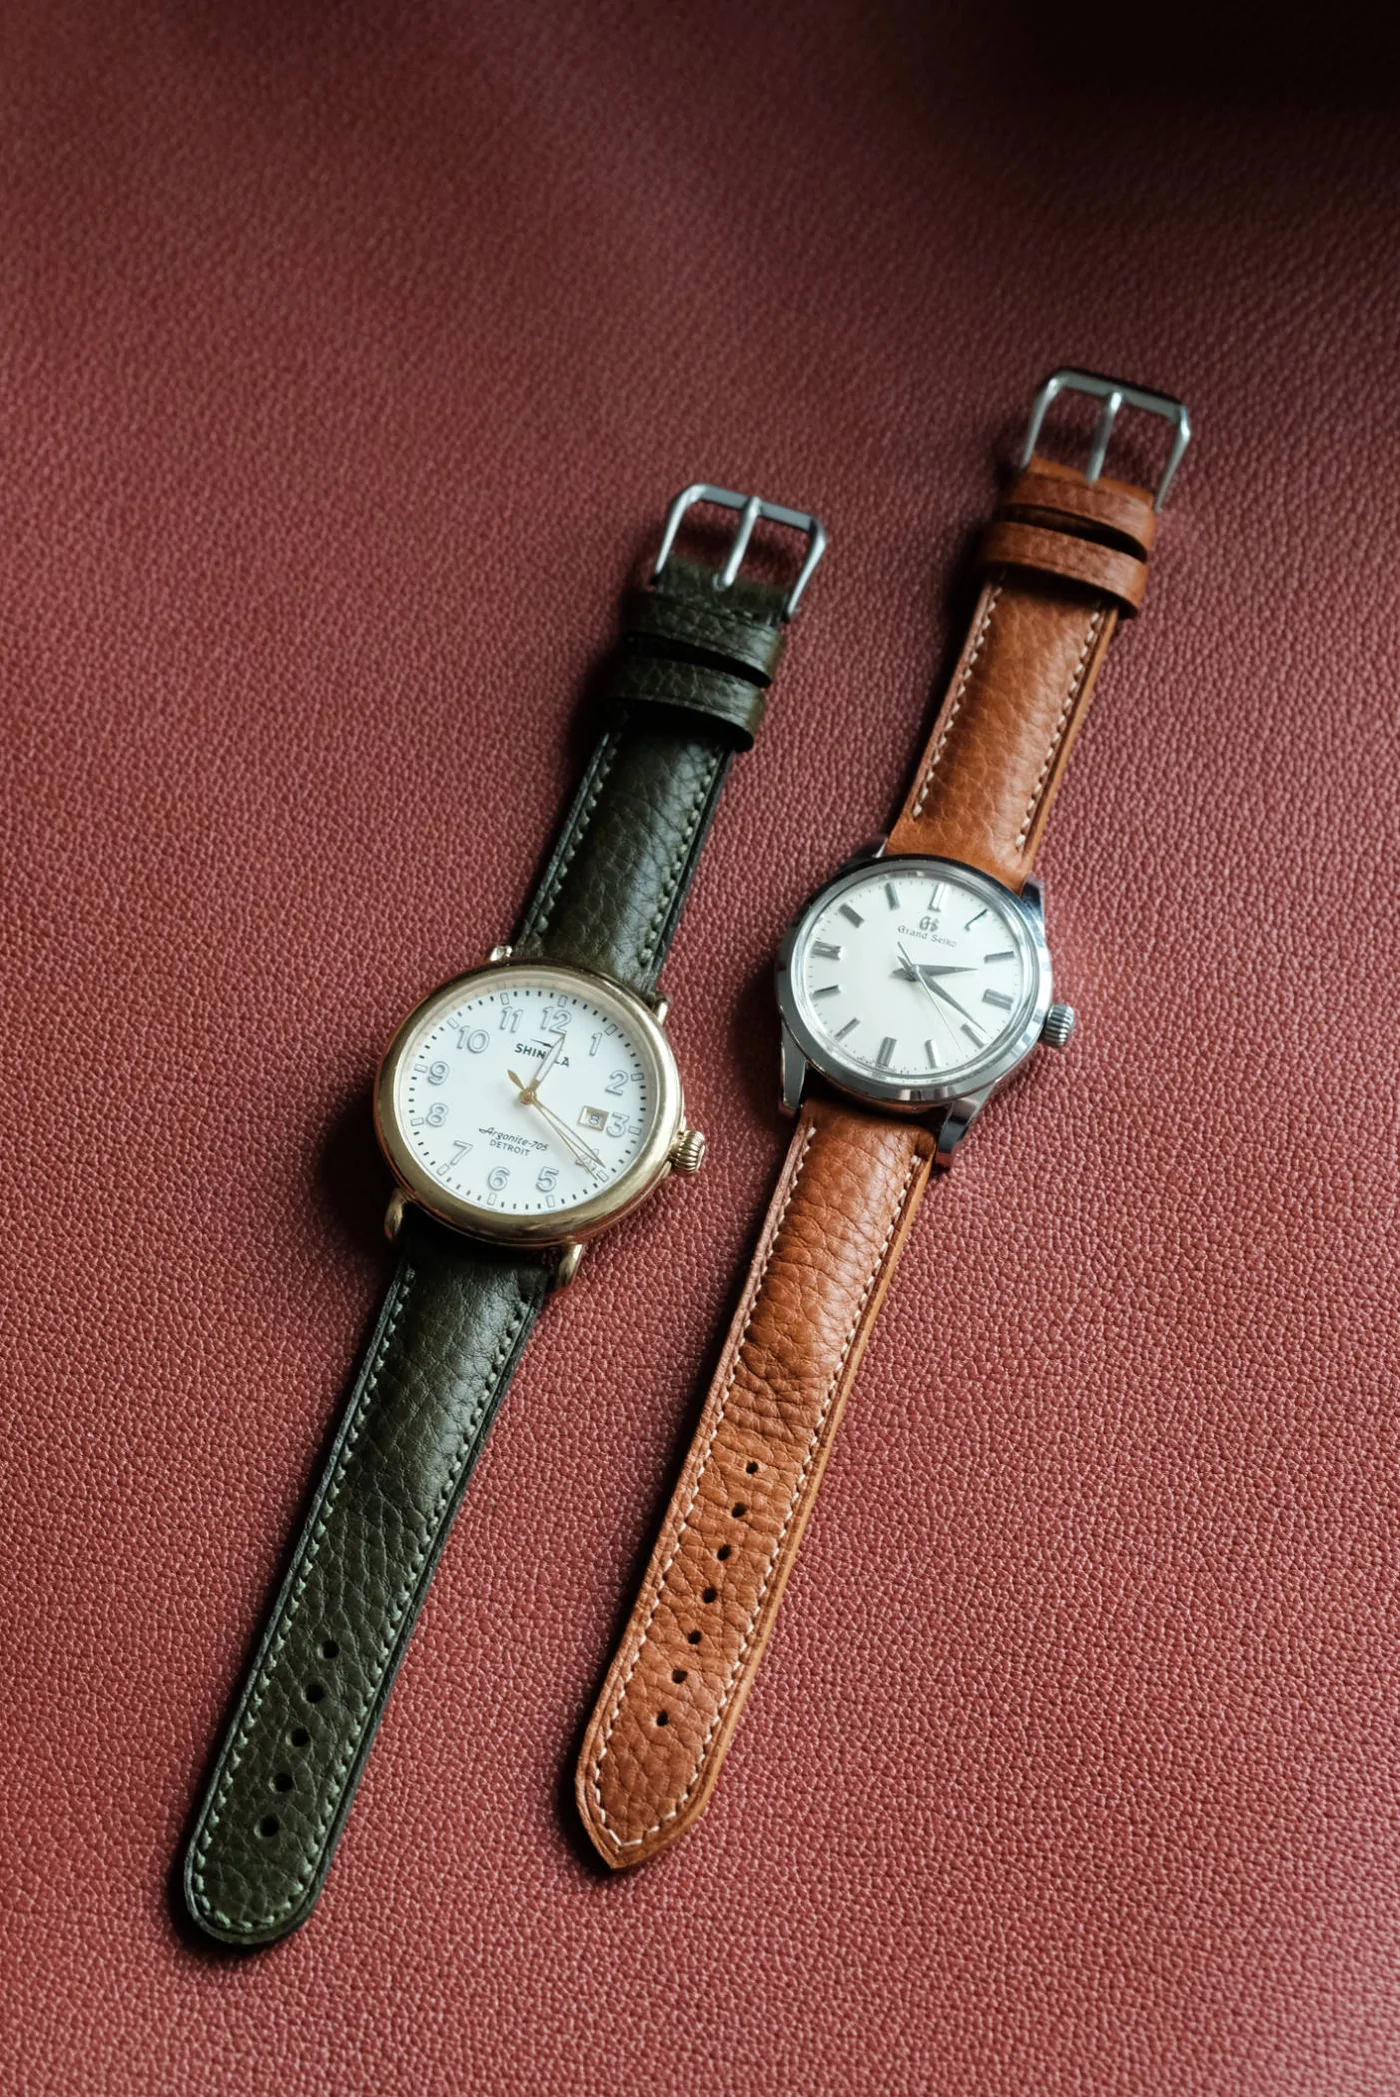 10 watch bands Cavalier Goods